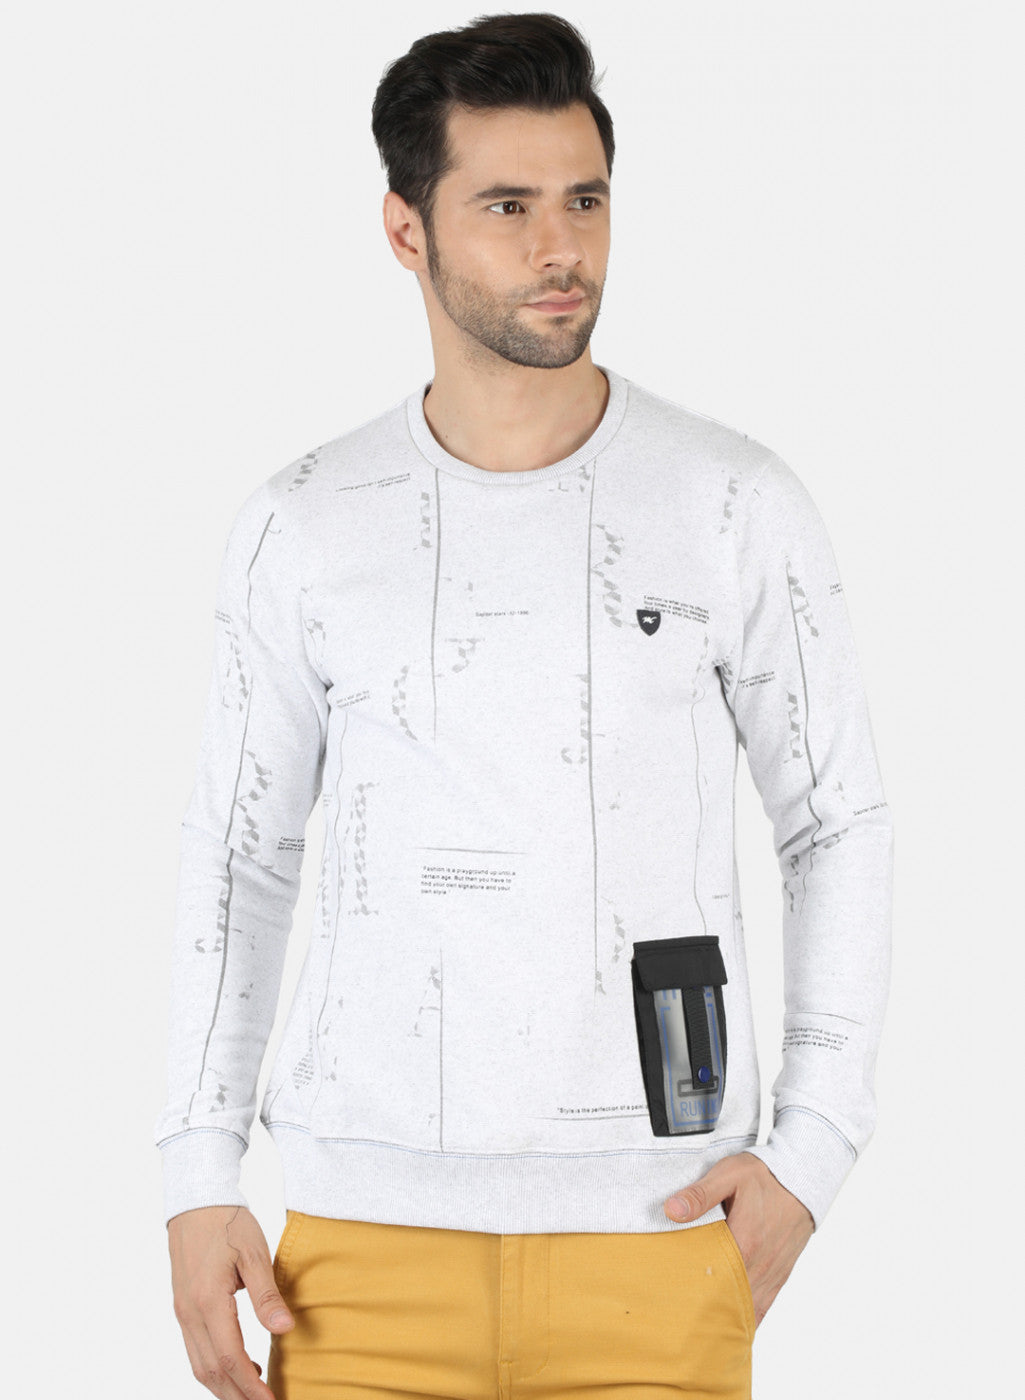 Buy Men Grey Printed Sweatshirt Online in India - Monte Carlo